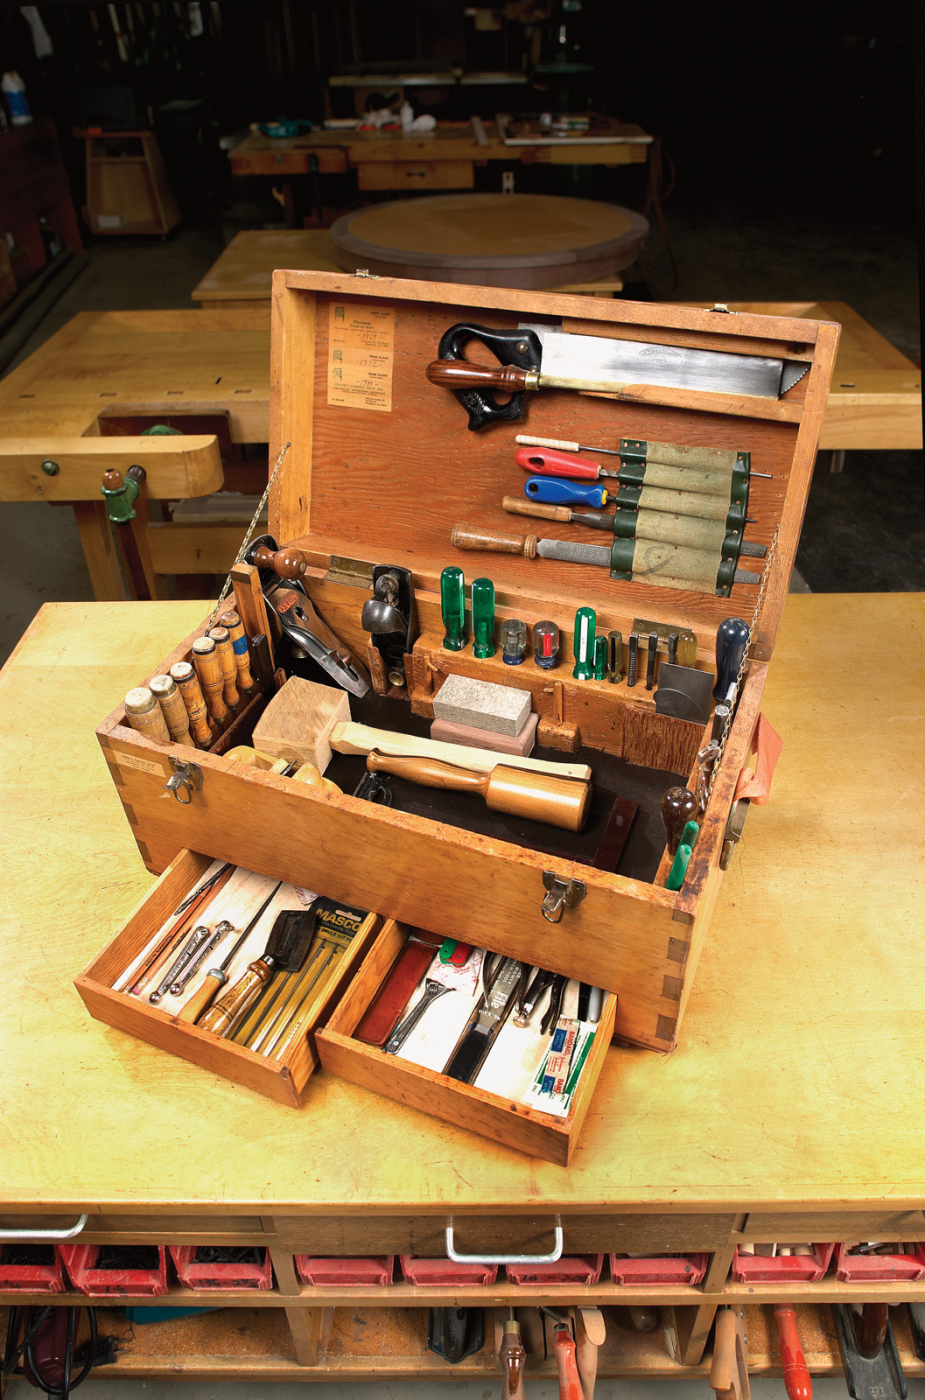 Basics: The standard fine woodworking kit 